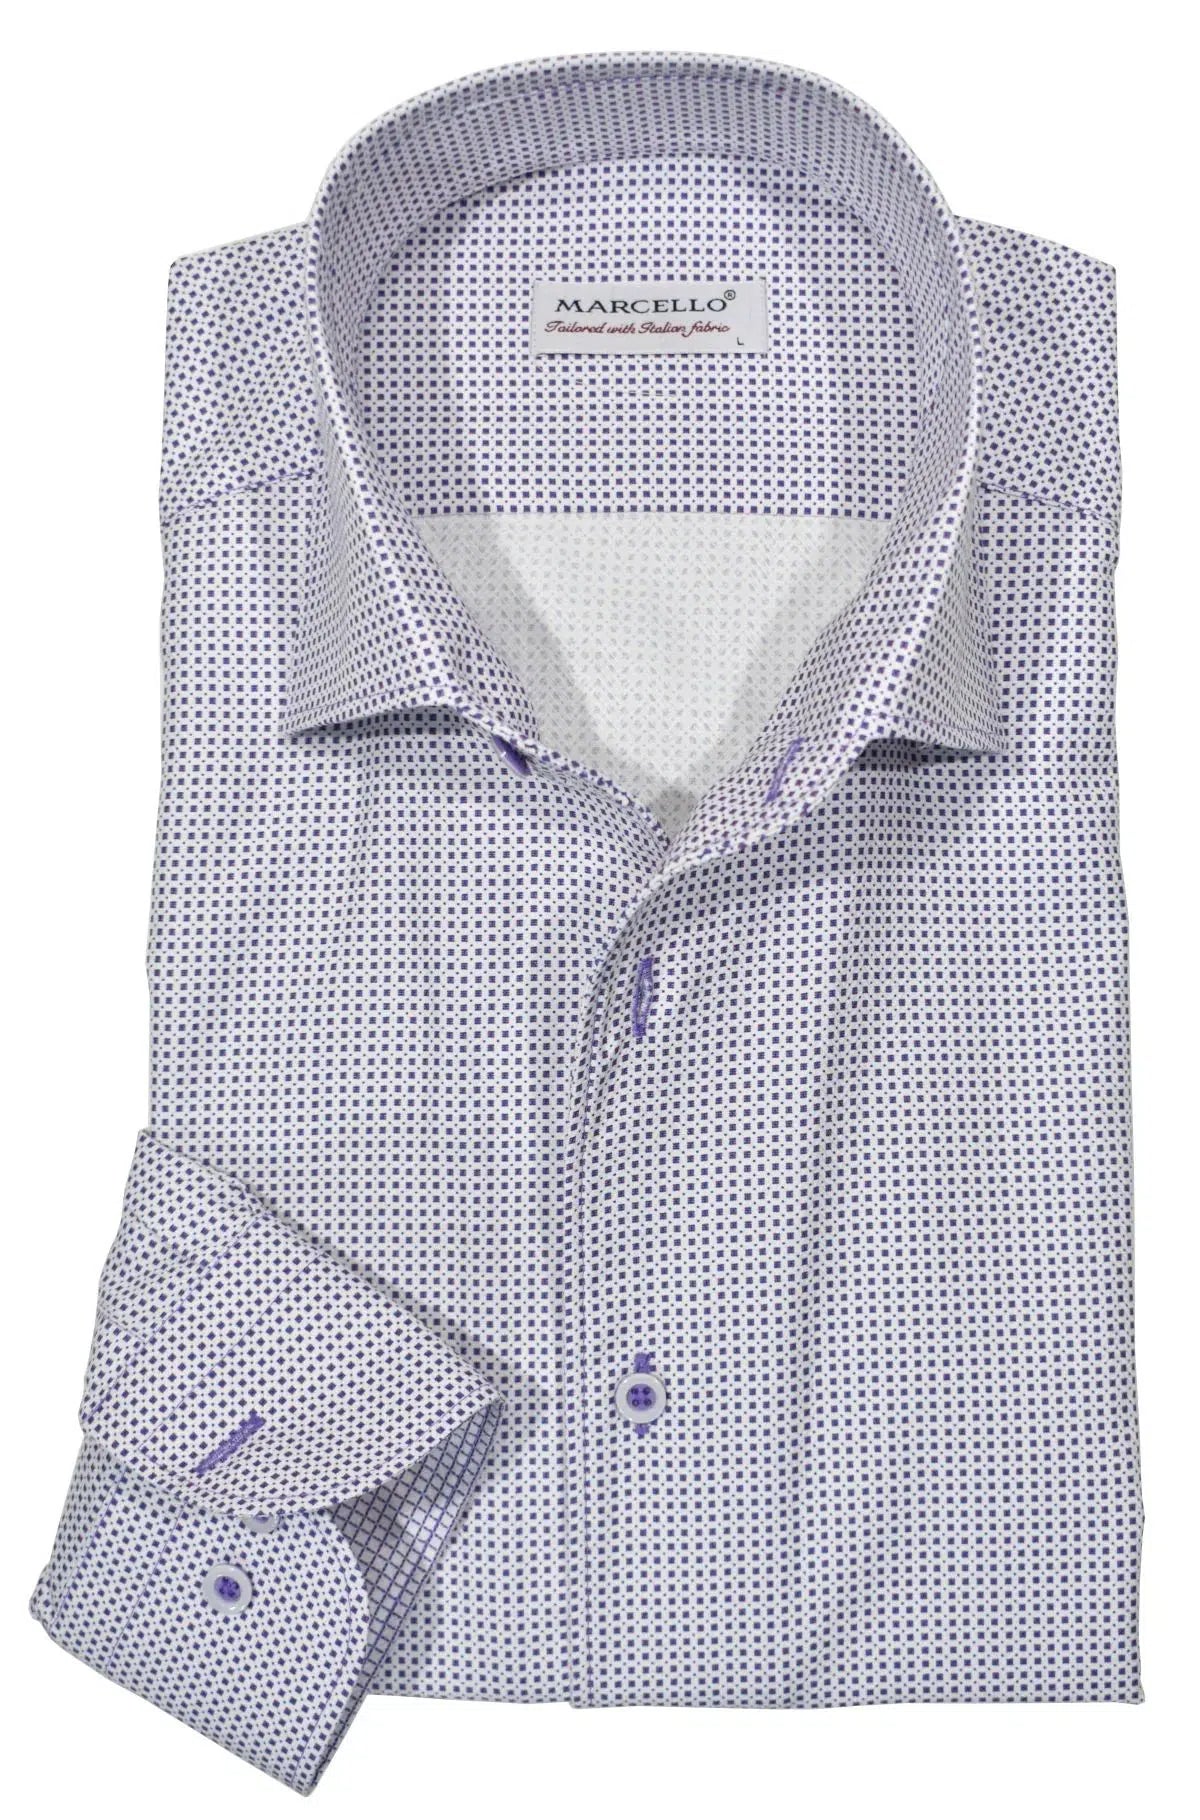 CMW727R - Cuadra purple casual fashion cotton shirt for men-Kuet.us